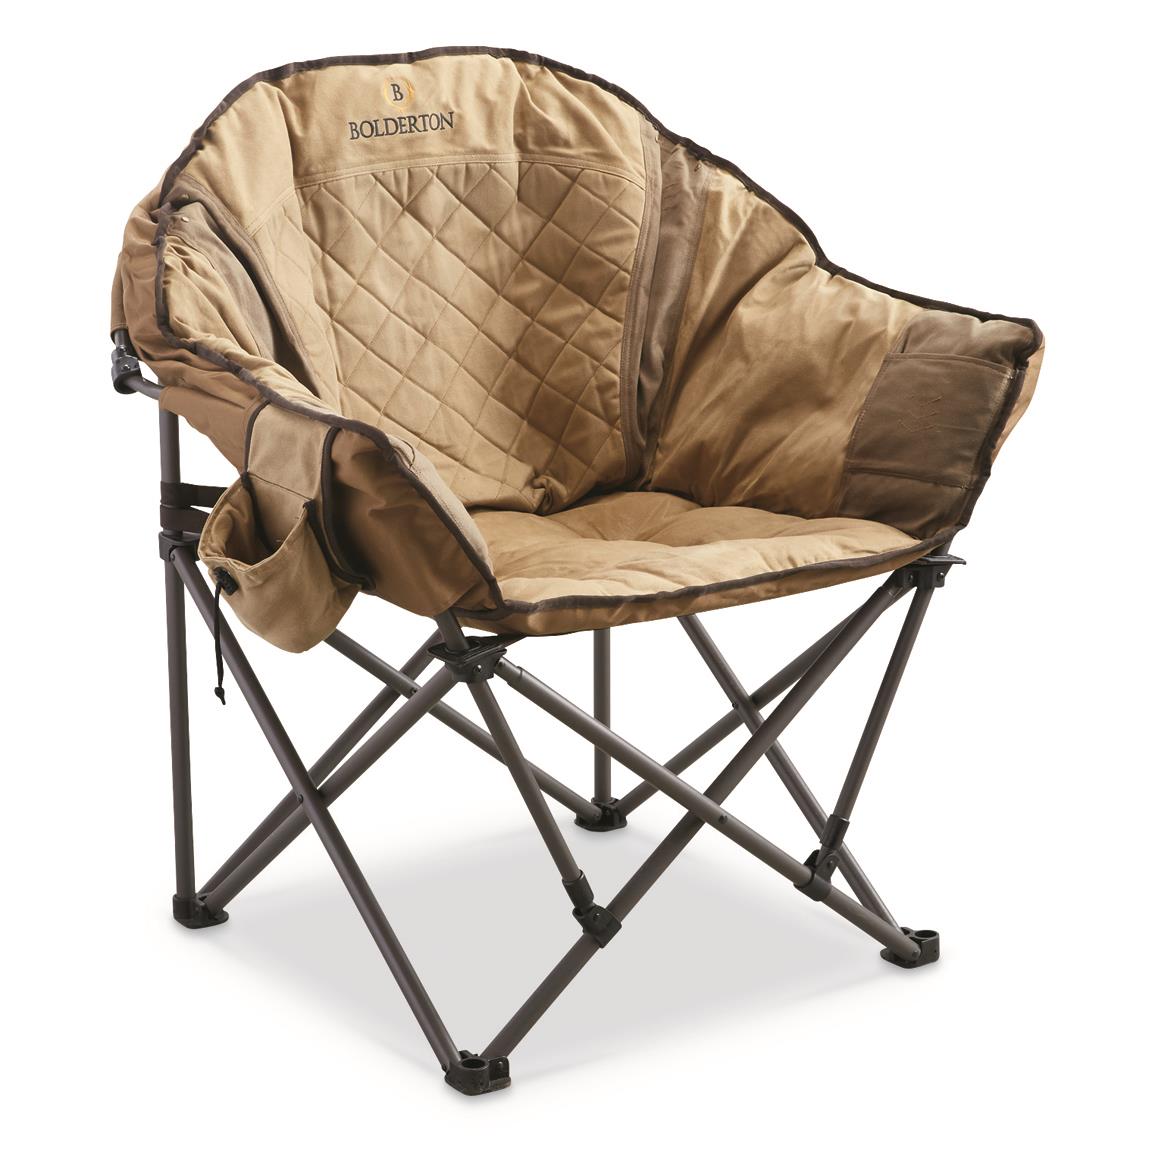 Bolderton Heritage Oversized Club Camp Chair, 500-lb. Capacity